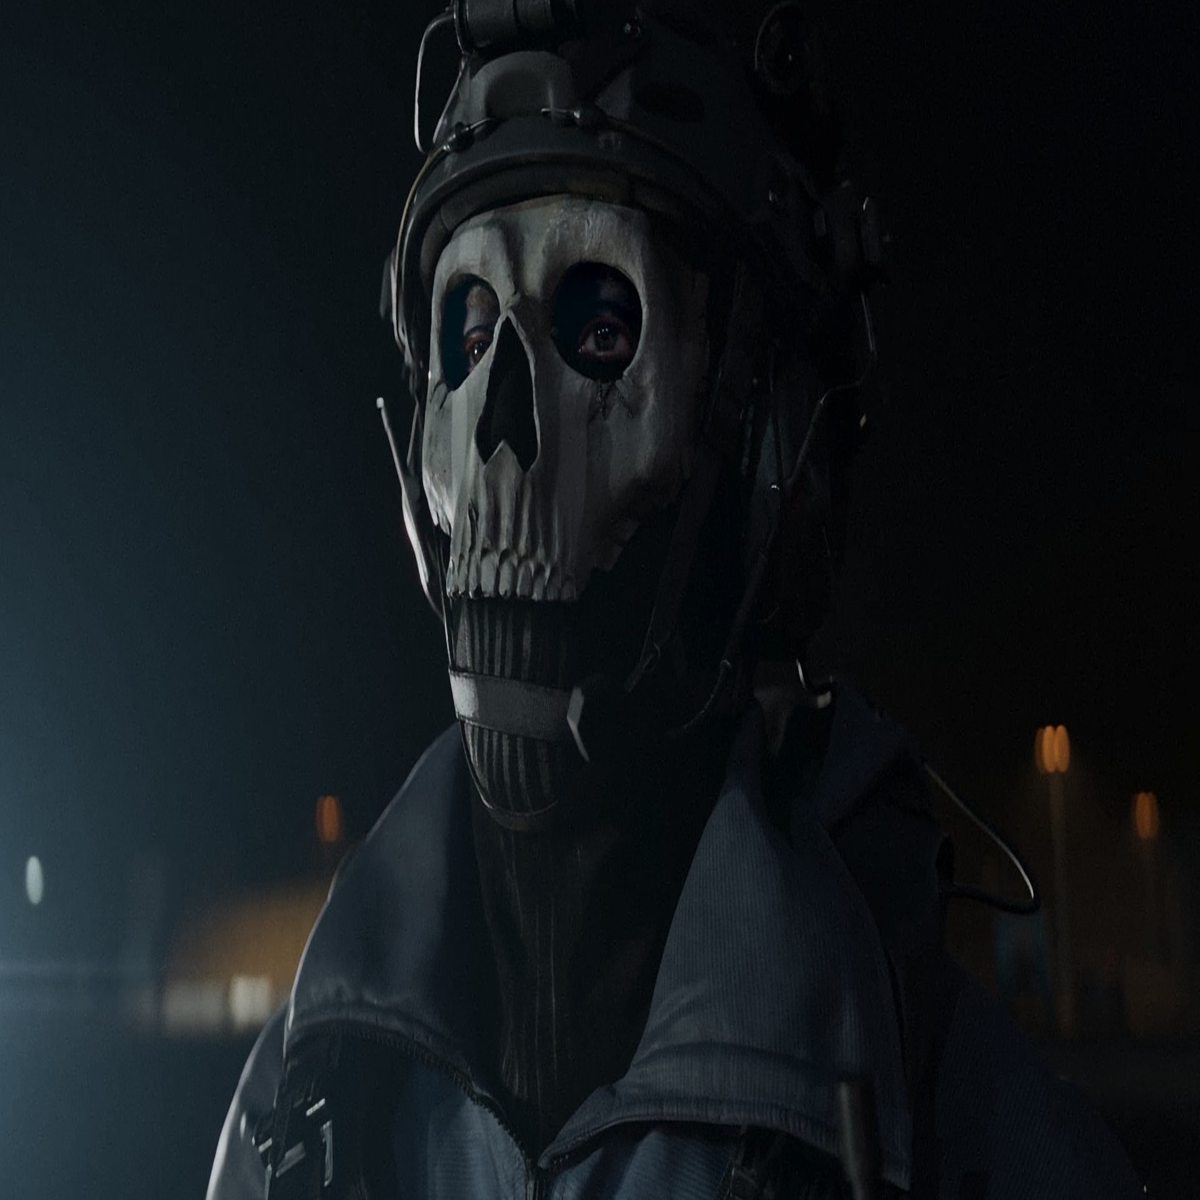 Call of Duty Modern Warfare 2 Skull Mask Full Face Helmet Hood Game Fancy  Dress